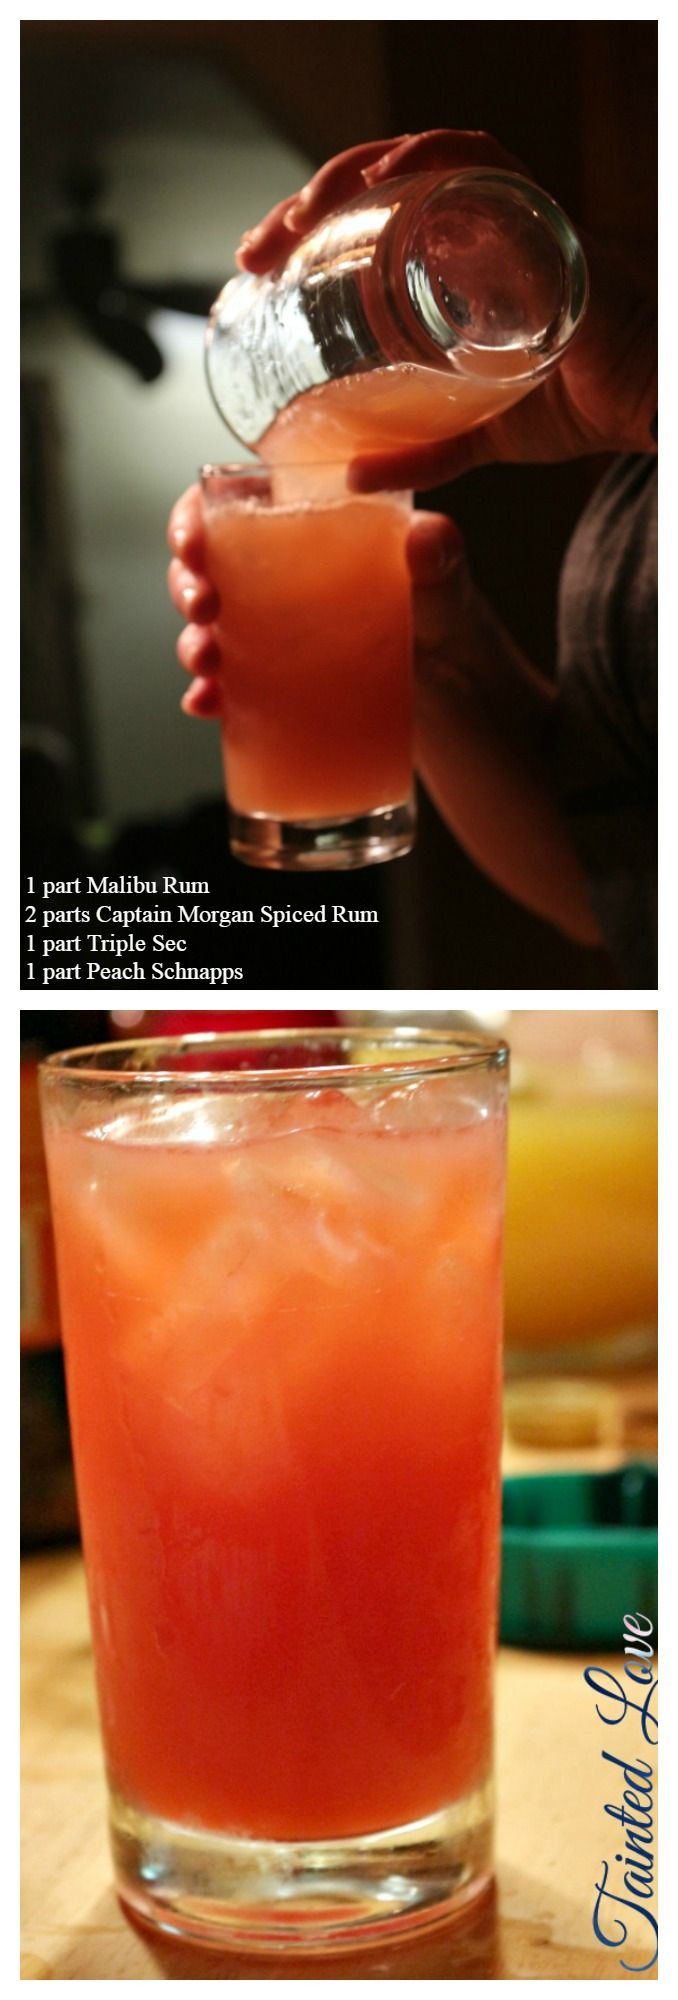 Good Rum Drinks
 Best 25 Spiced rum drinks ideas on Pinterest